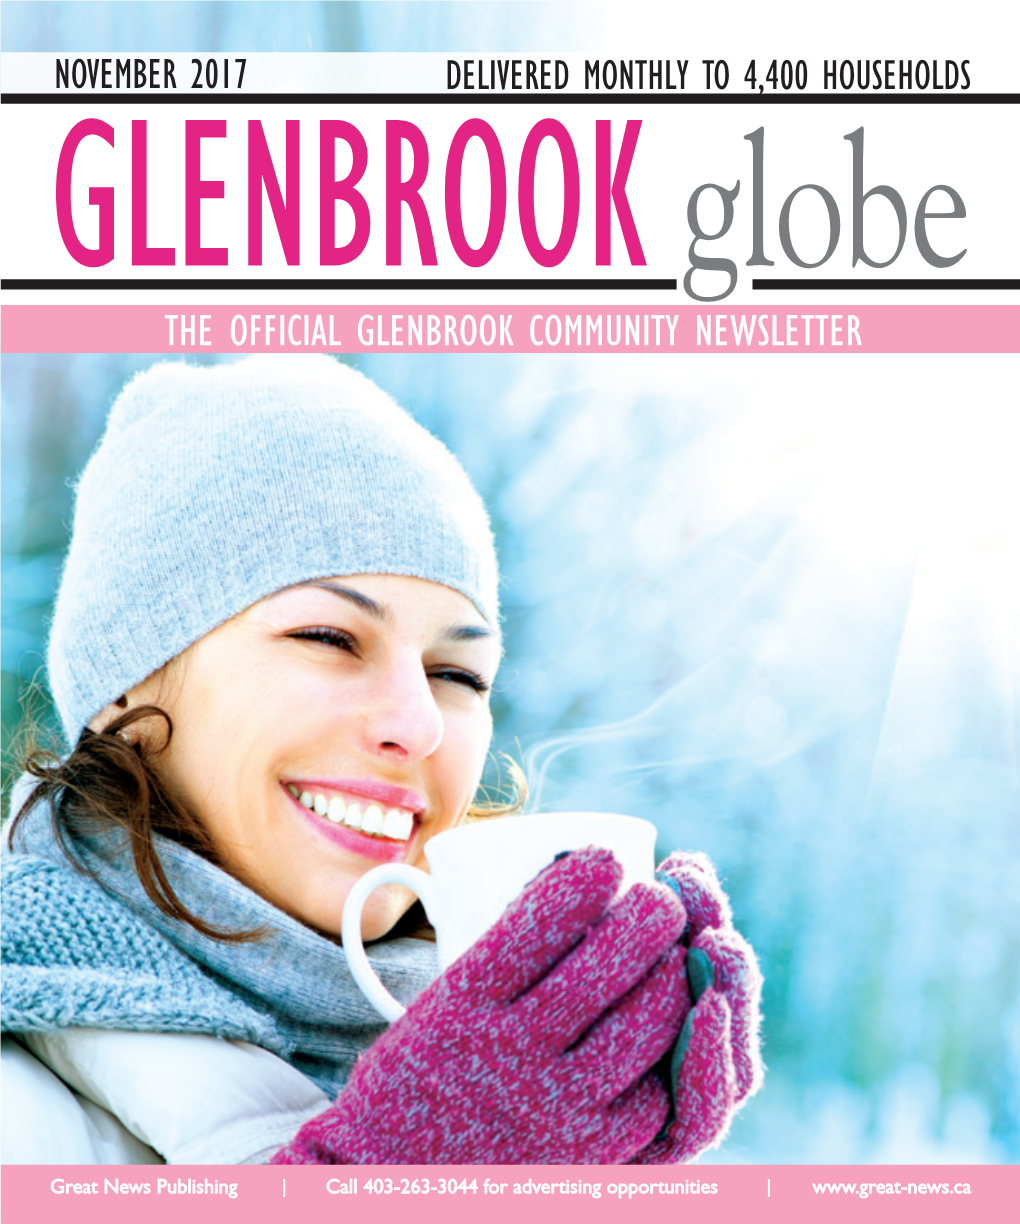 The Official Glenbrook Community Newsletter